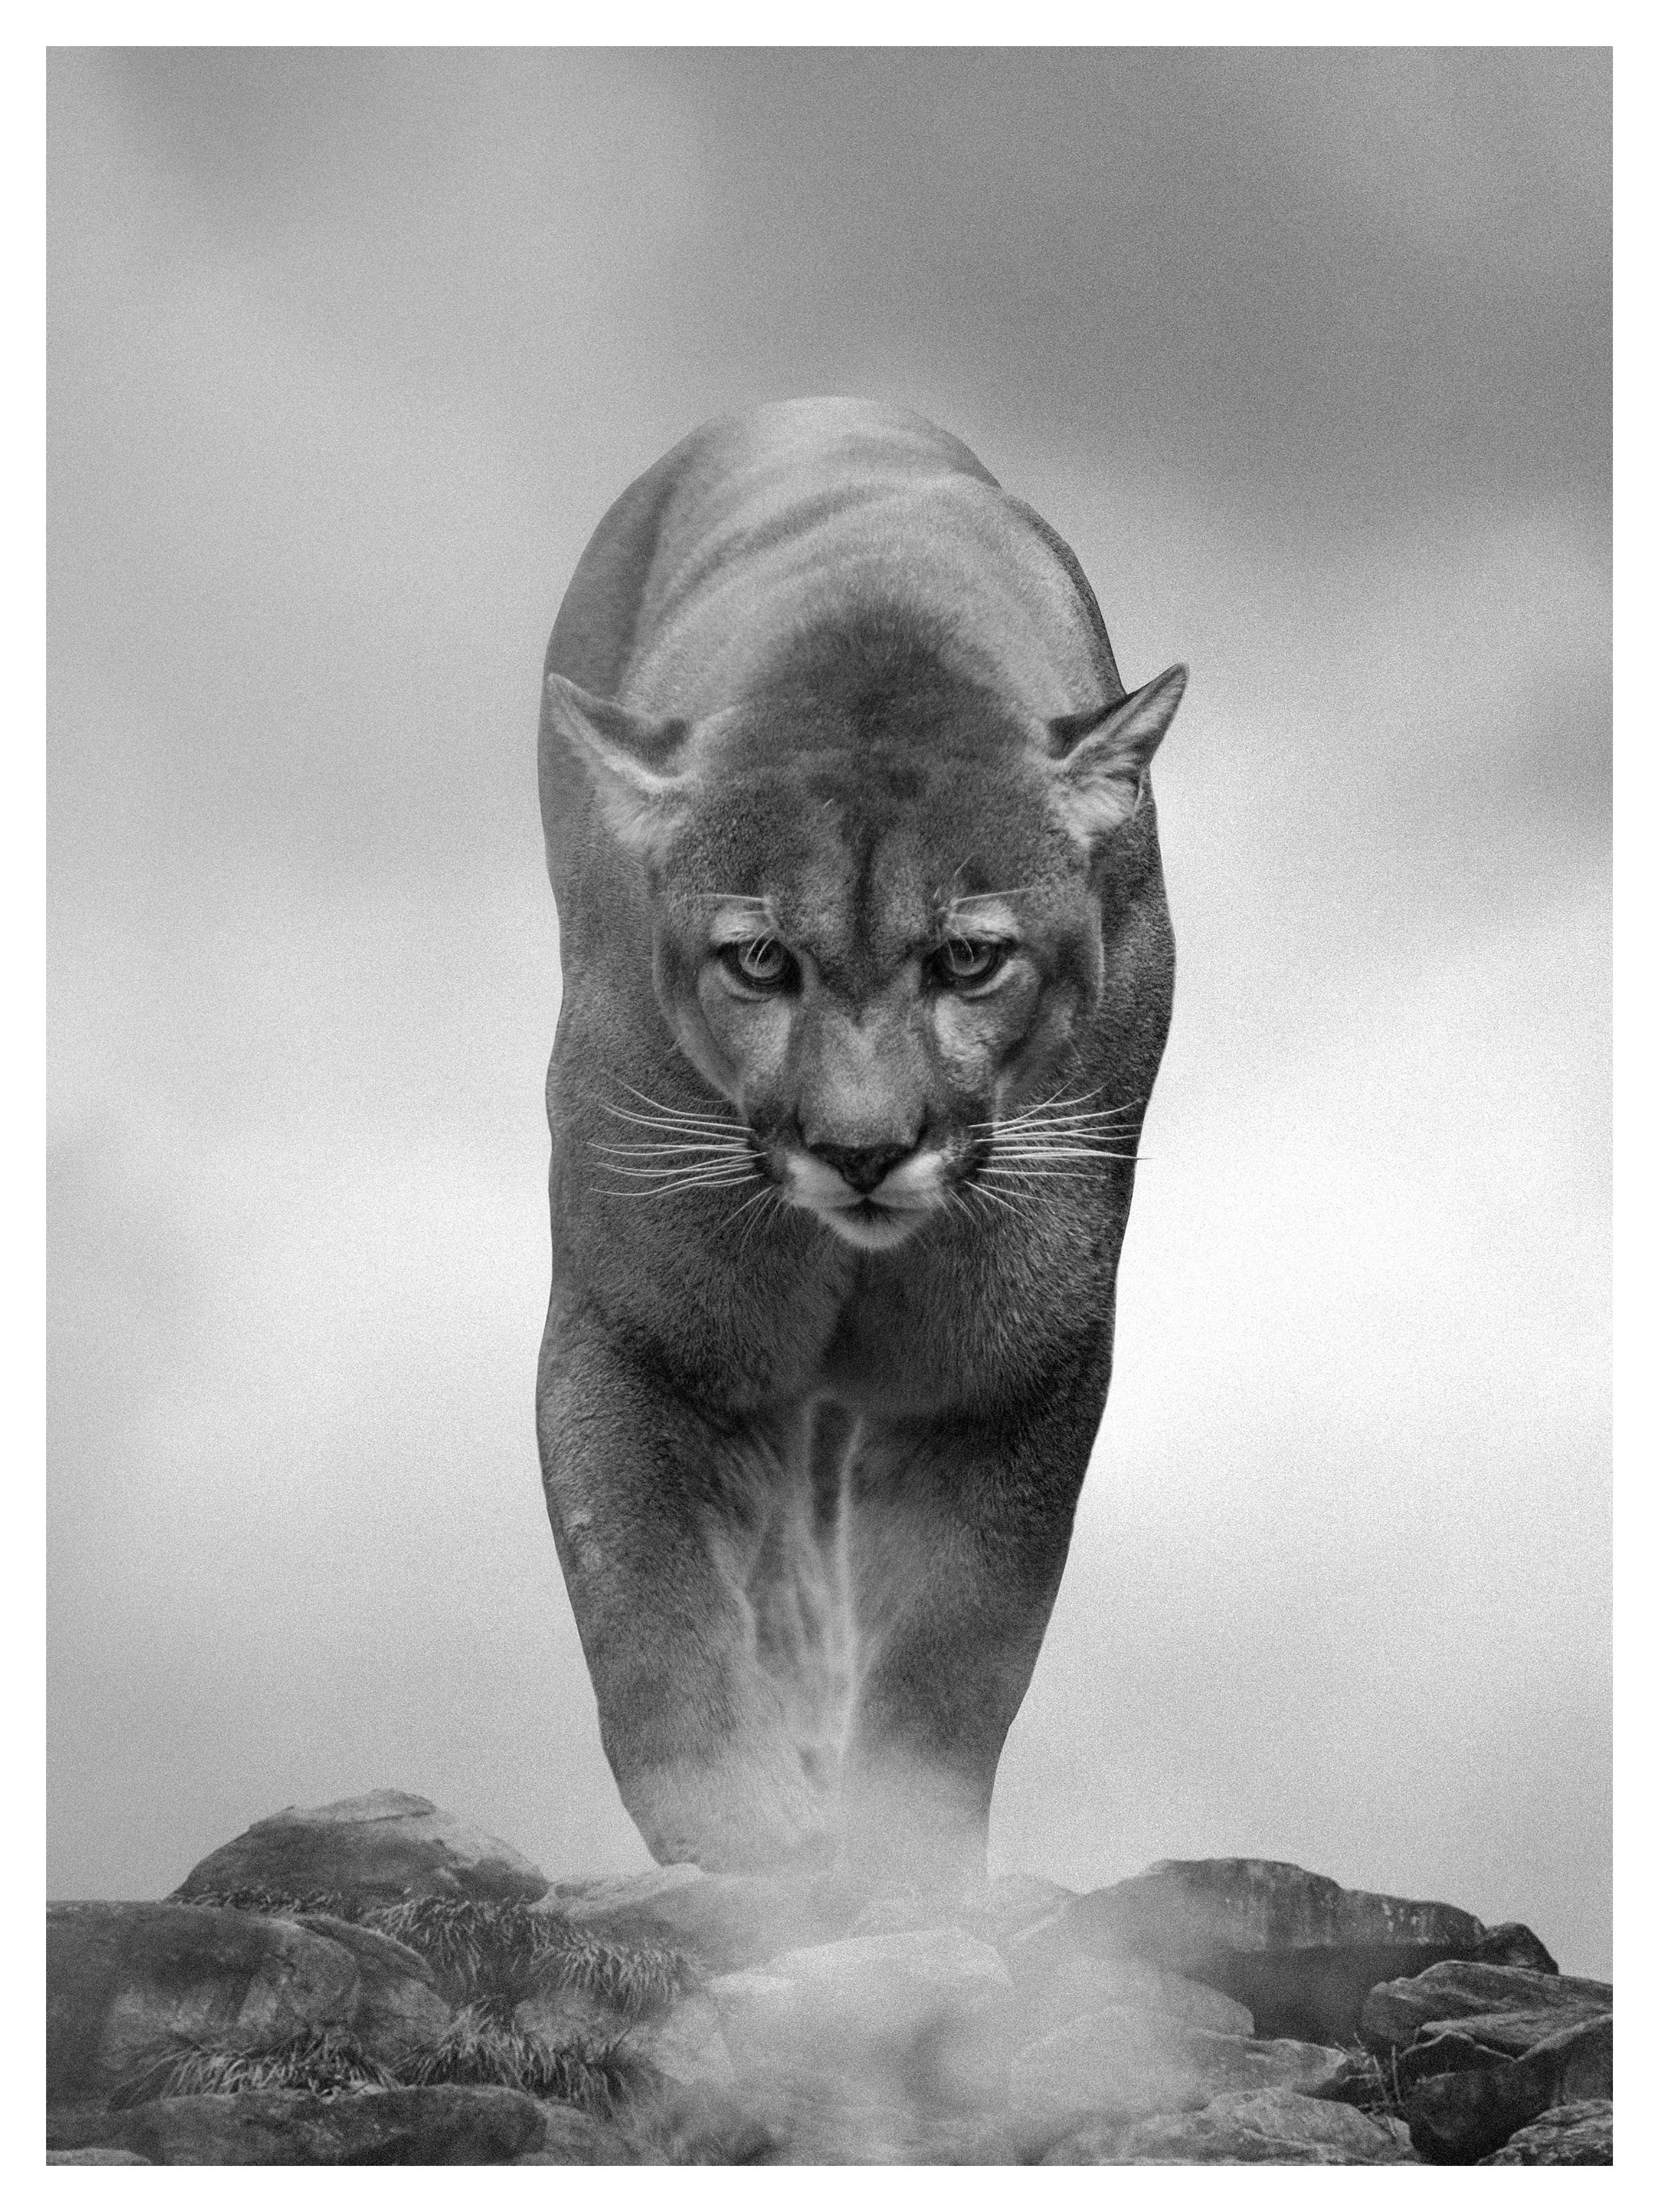 Shane Russeck Landscape Photograph -  36x48 Unsigned Test Print  Photography, Cougar, Mountain Lion